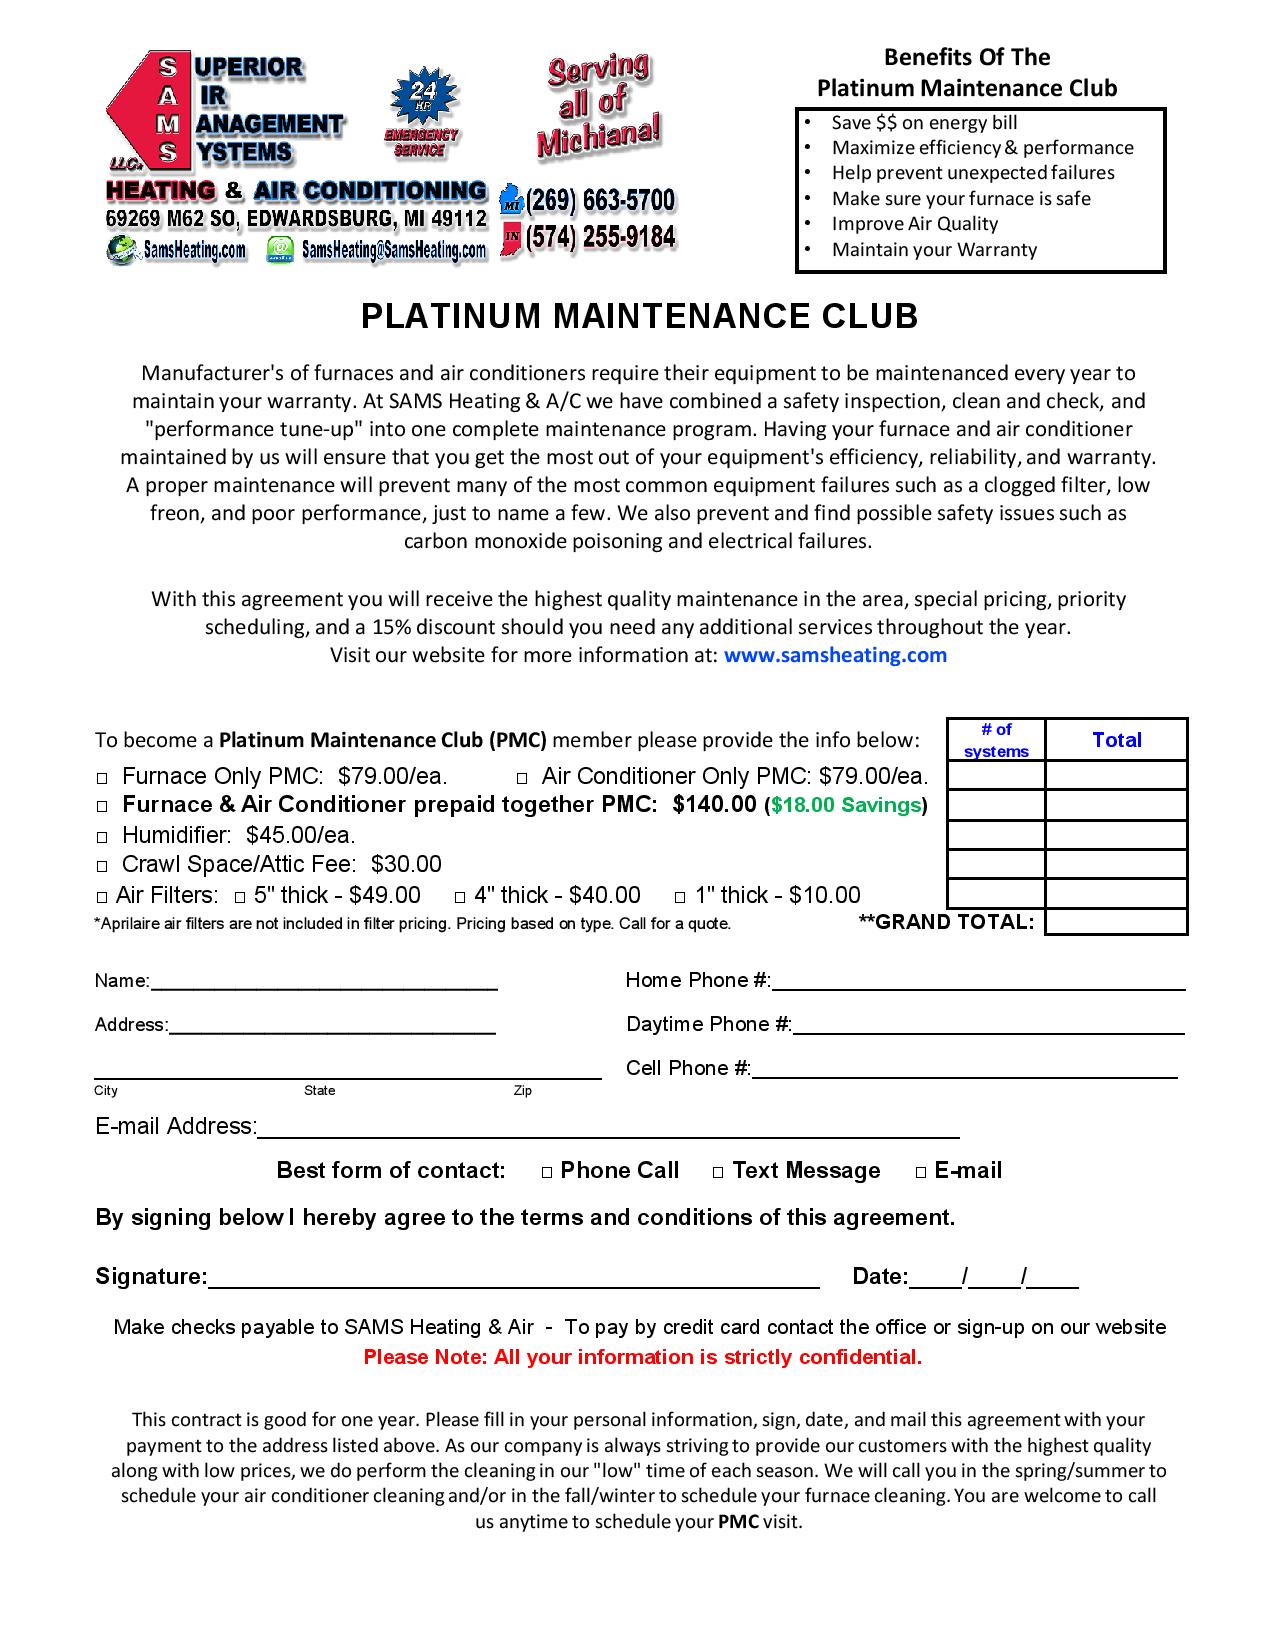 SAMS Platinum Maintenance Club